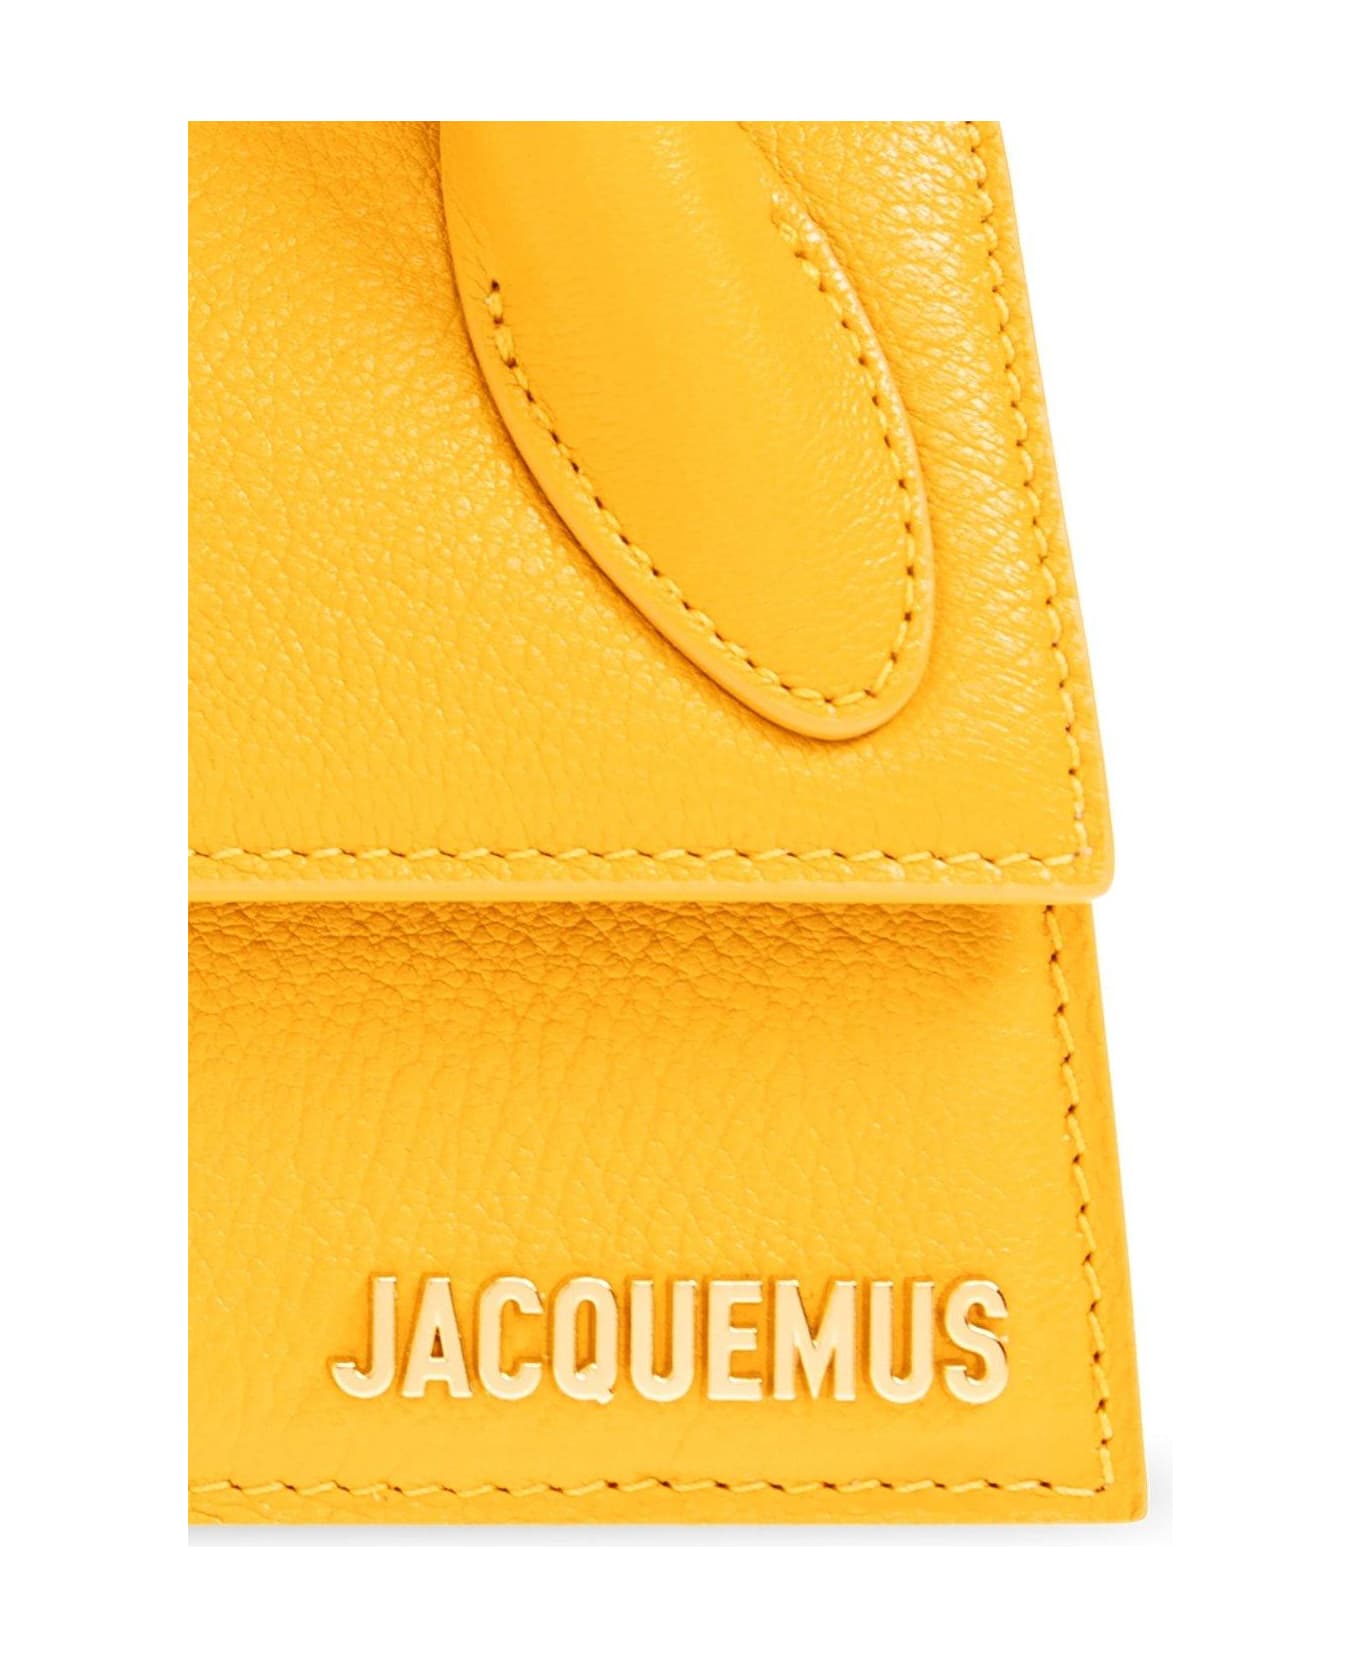 Jacquemus Le Chiquito Long Top Handle Bag - Dark orange トートバッグ